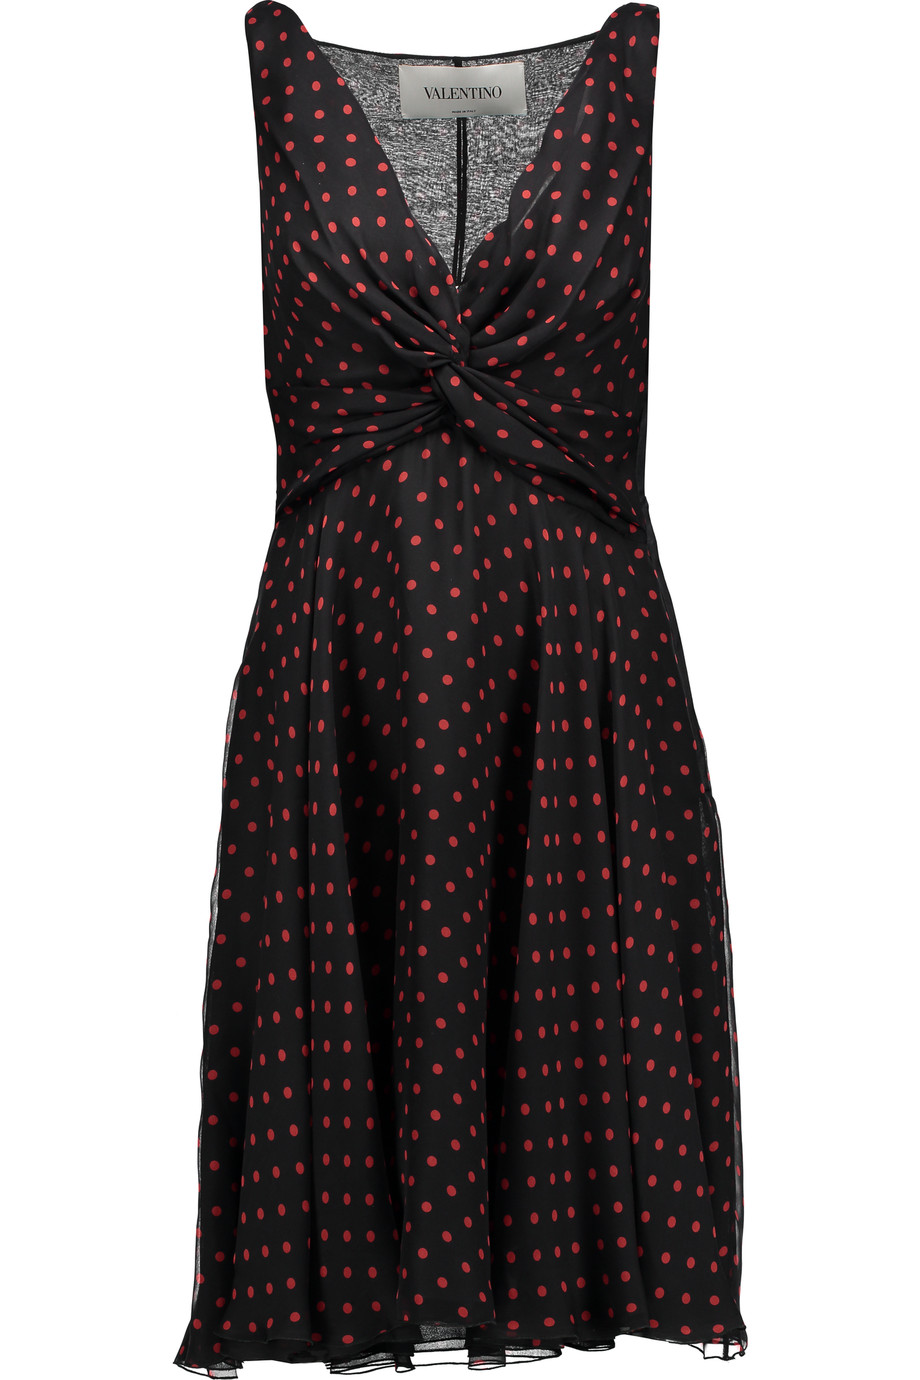 Valentino Twist-front Polka-dot Silk-chiffon Dress | ModeSens